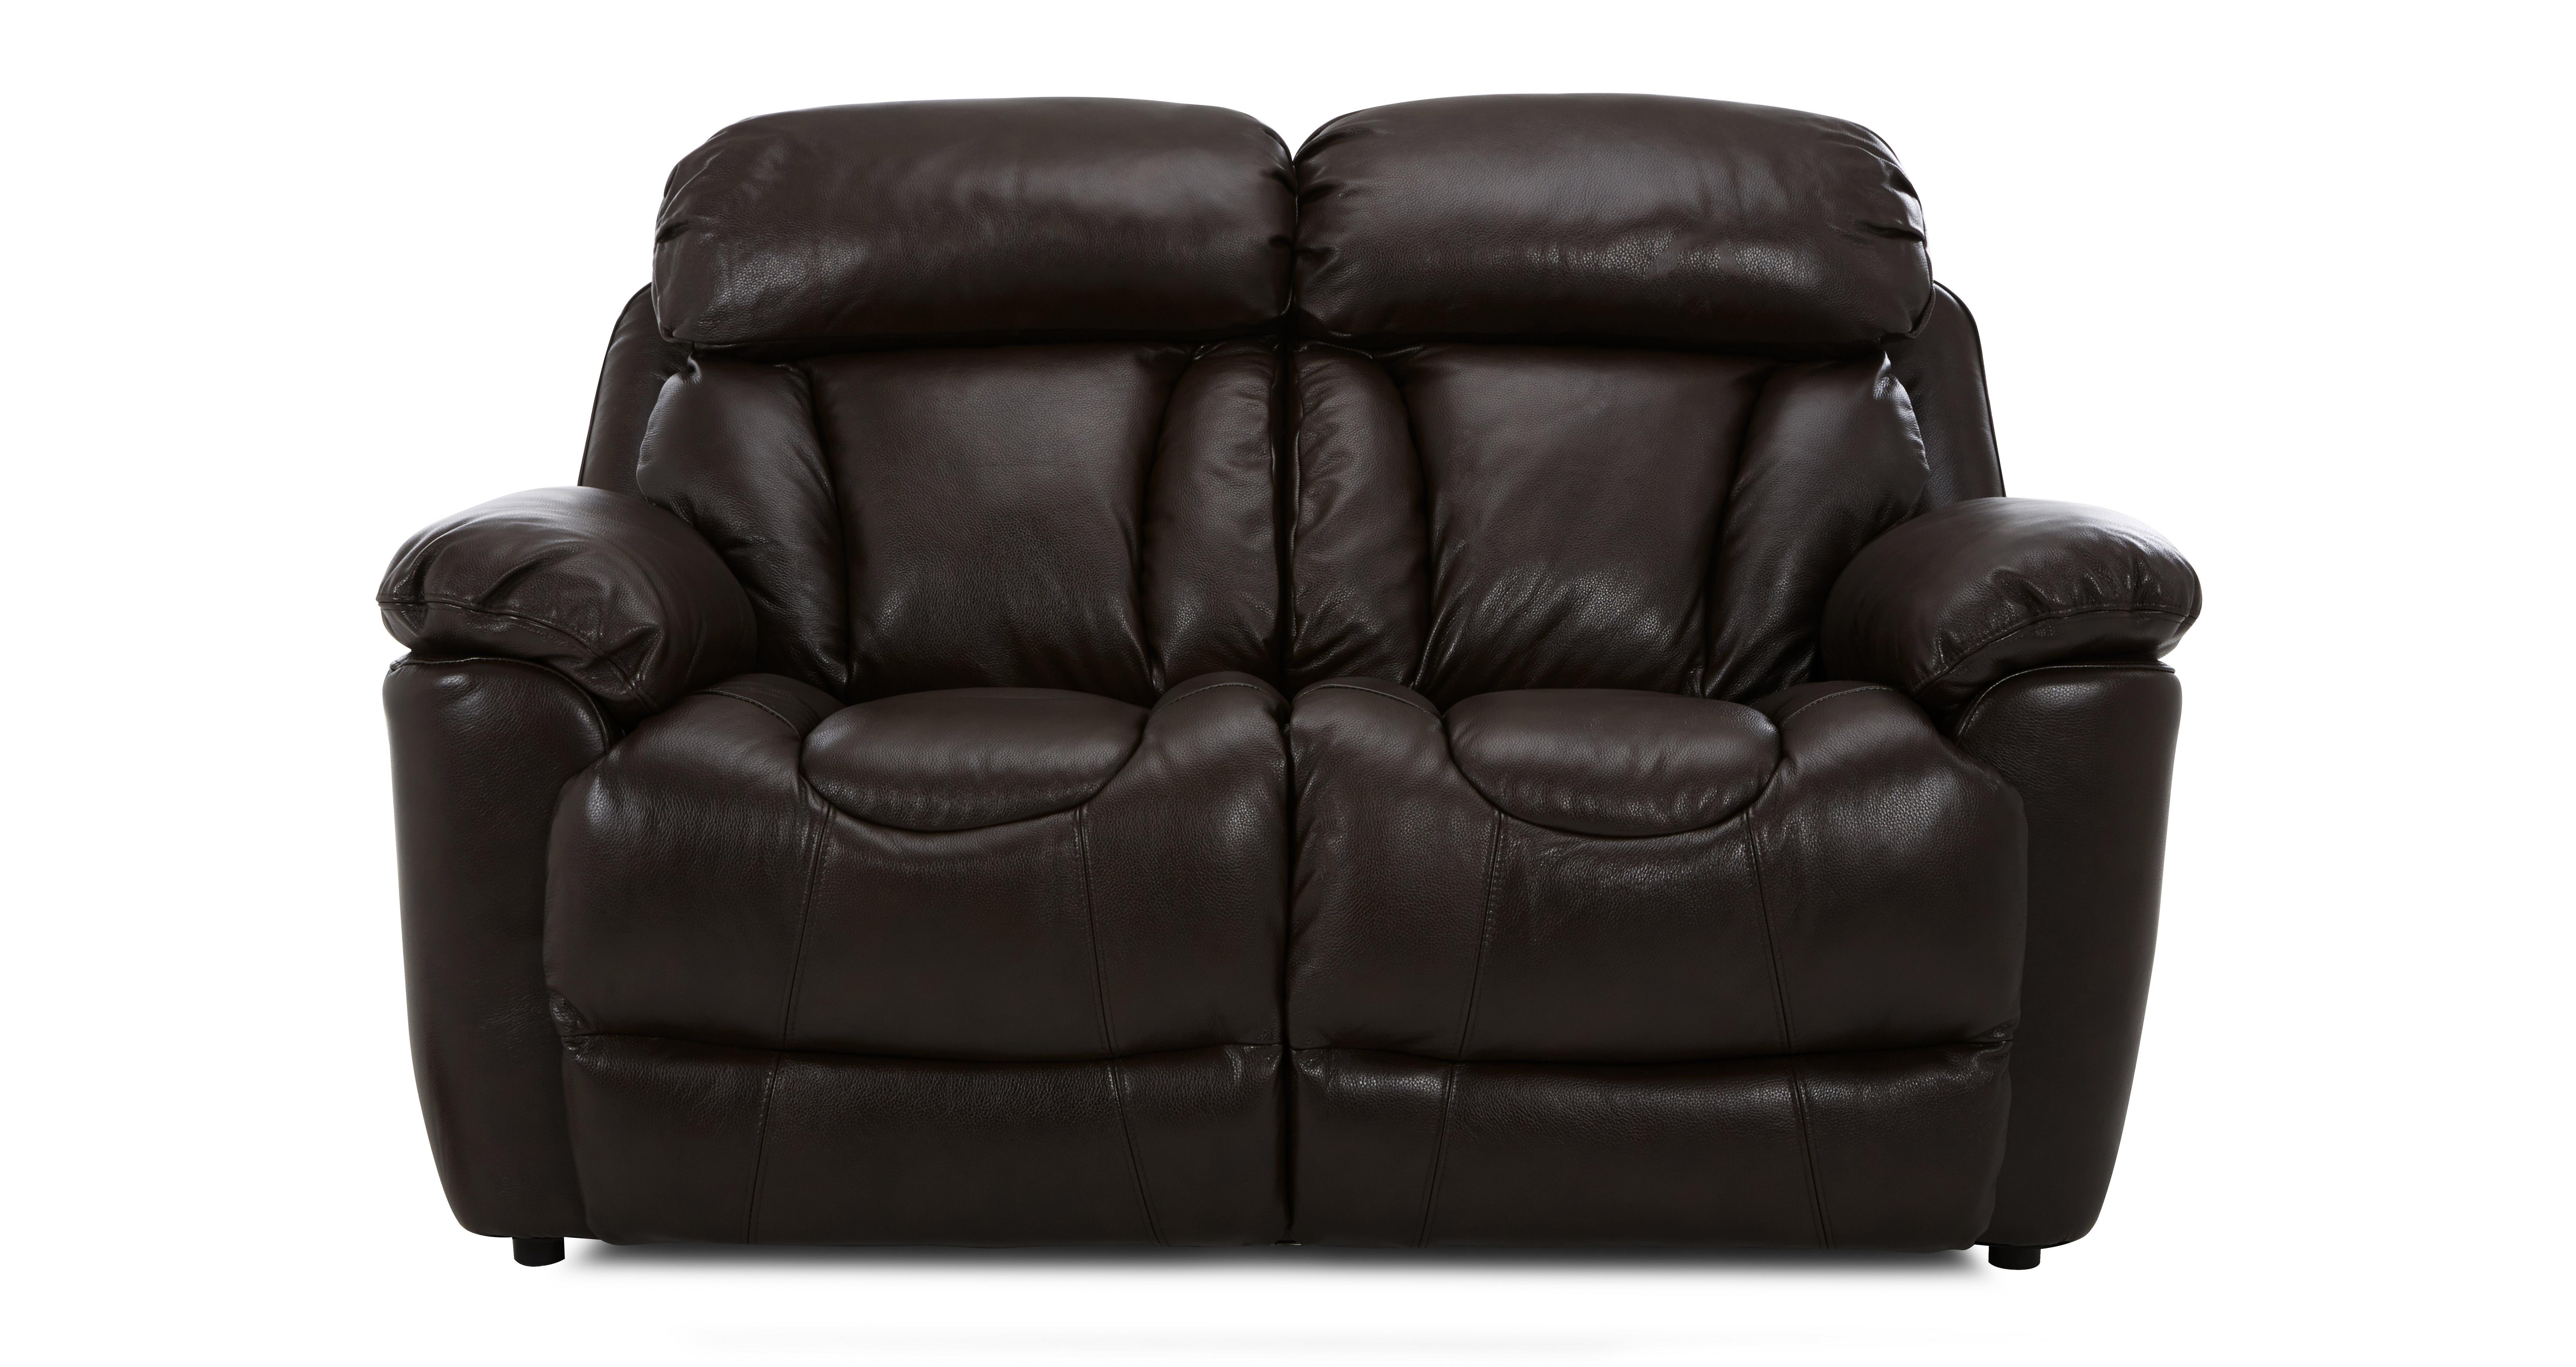 dfs supreme leather sofa reviews